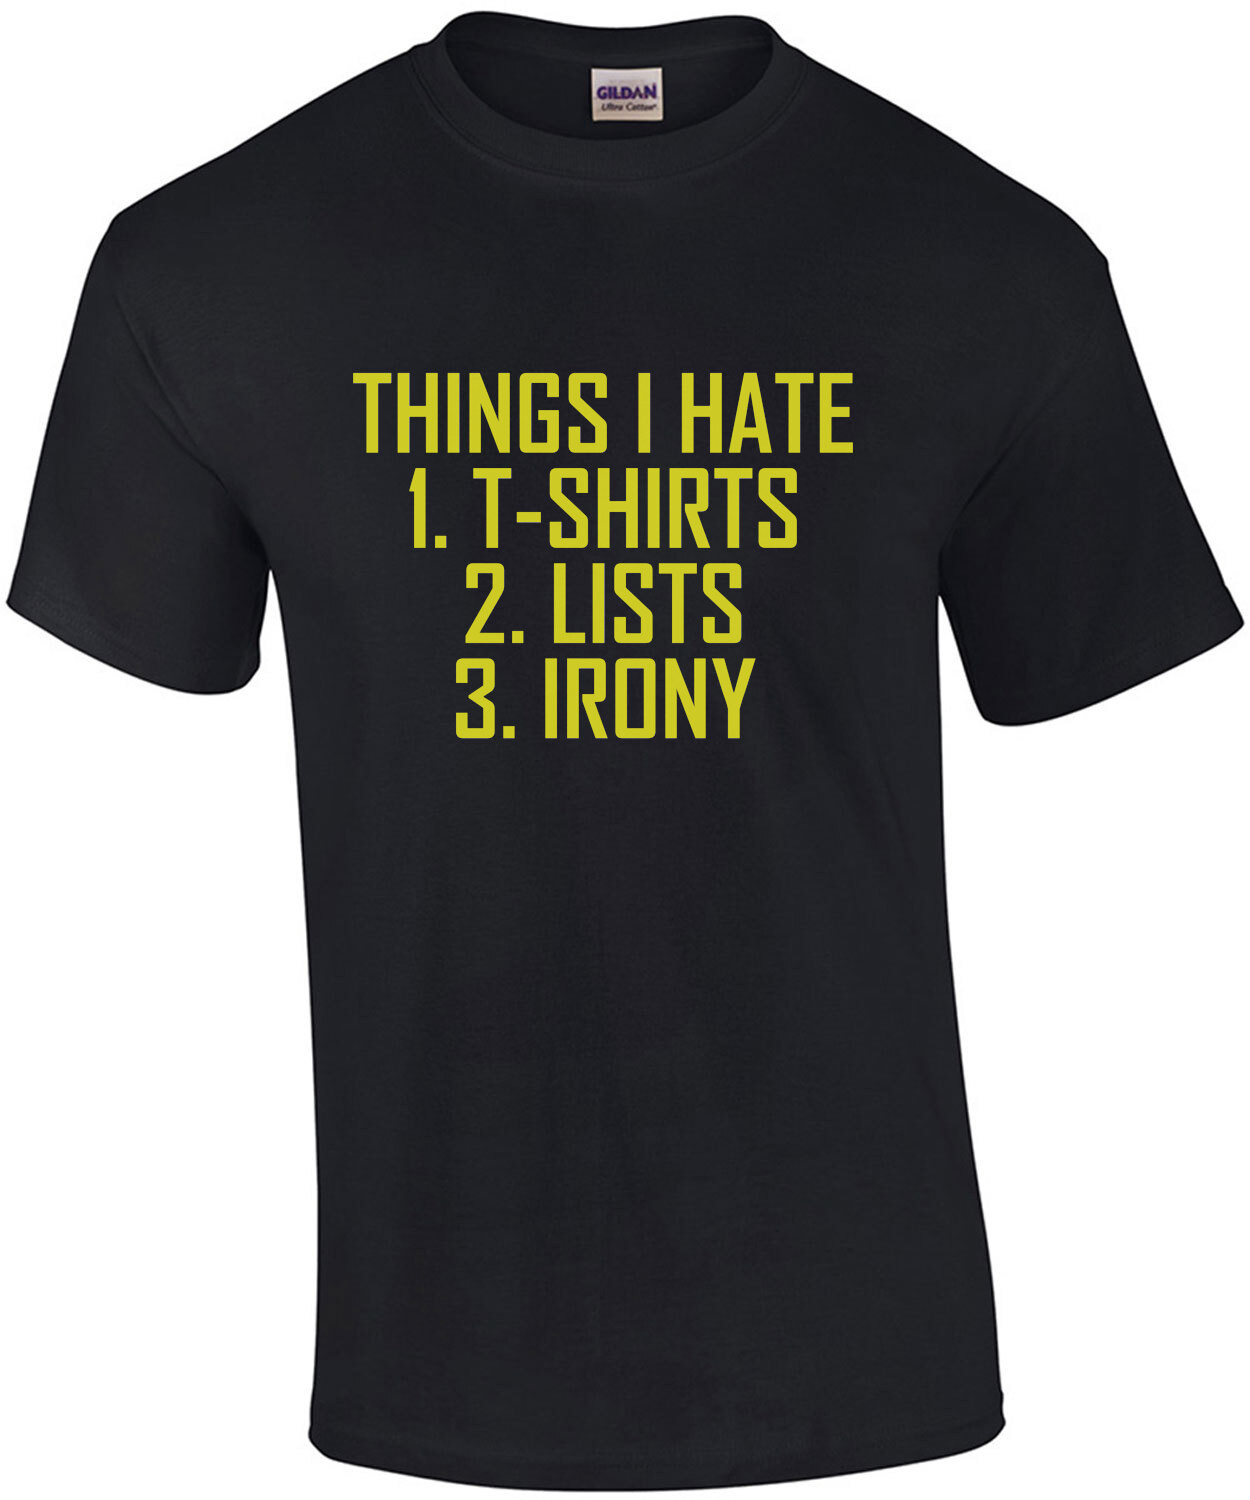 Things I hate - T-shirts Lists Irony - Irony T-Shirt